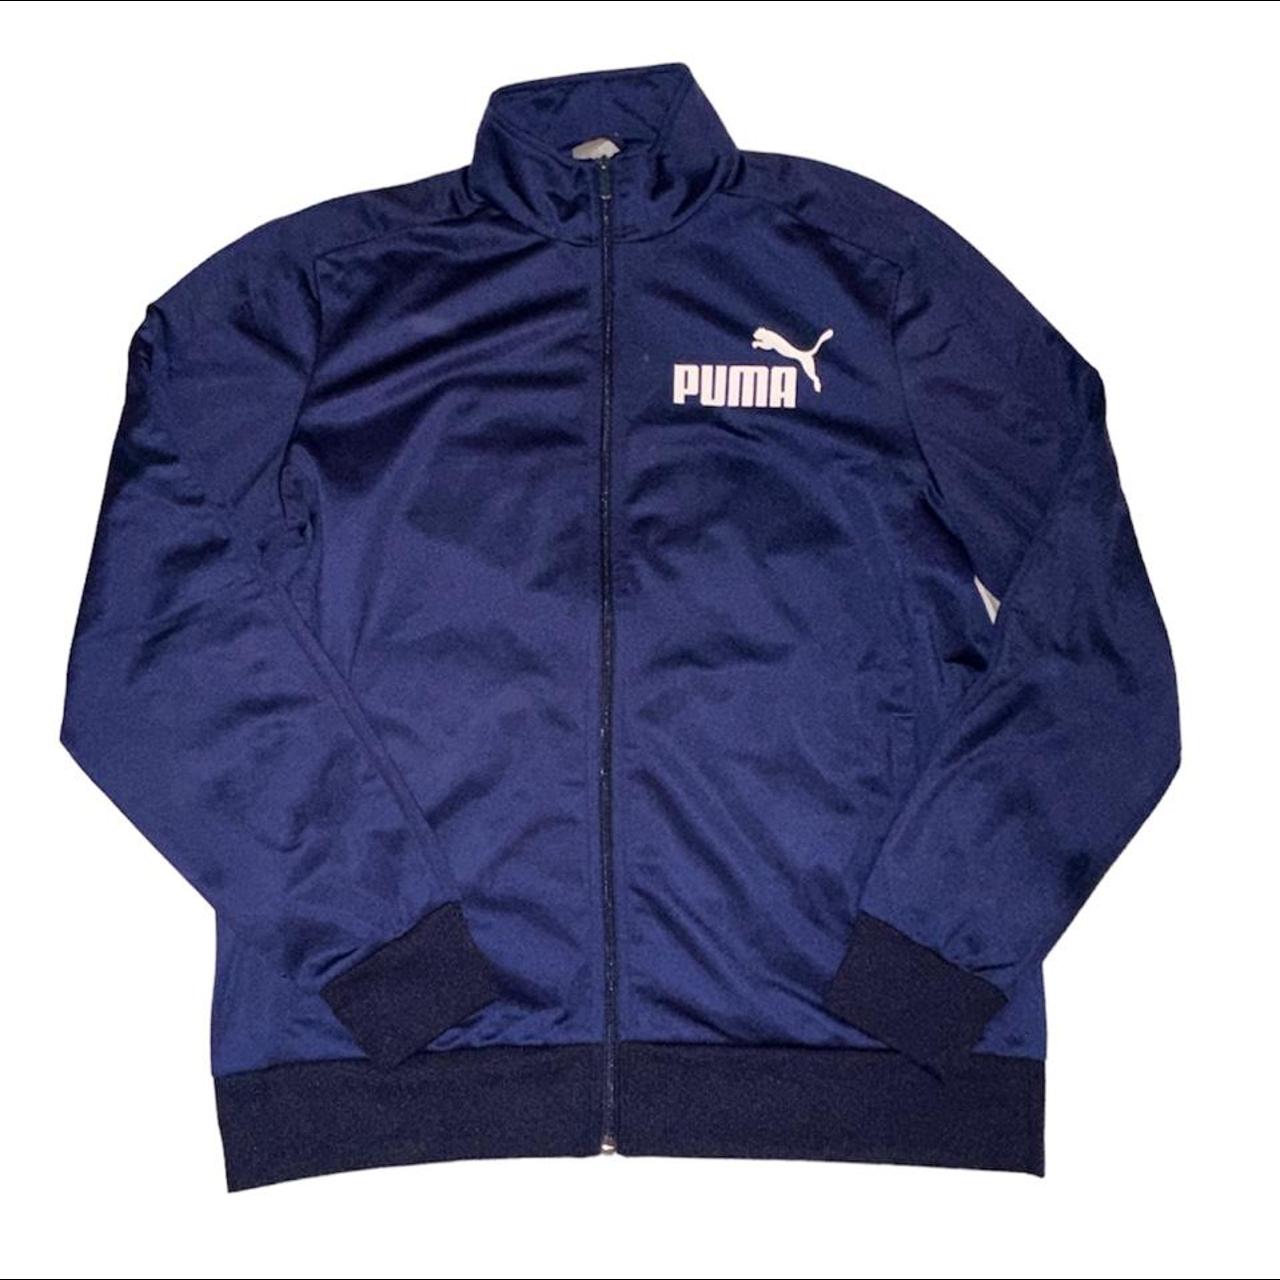 Puma zip up jacket - size L men’s - great condition... - Depop